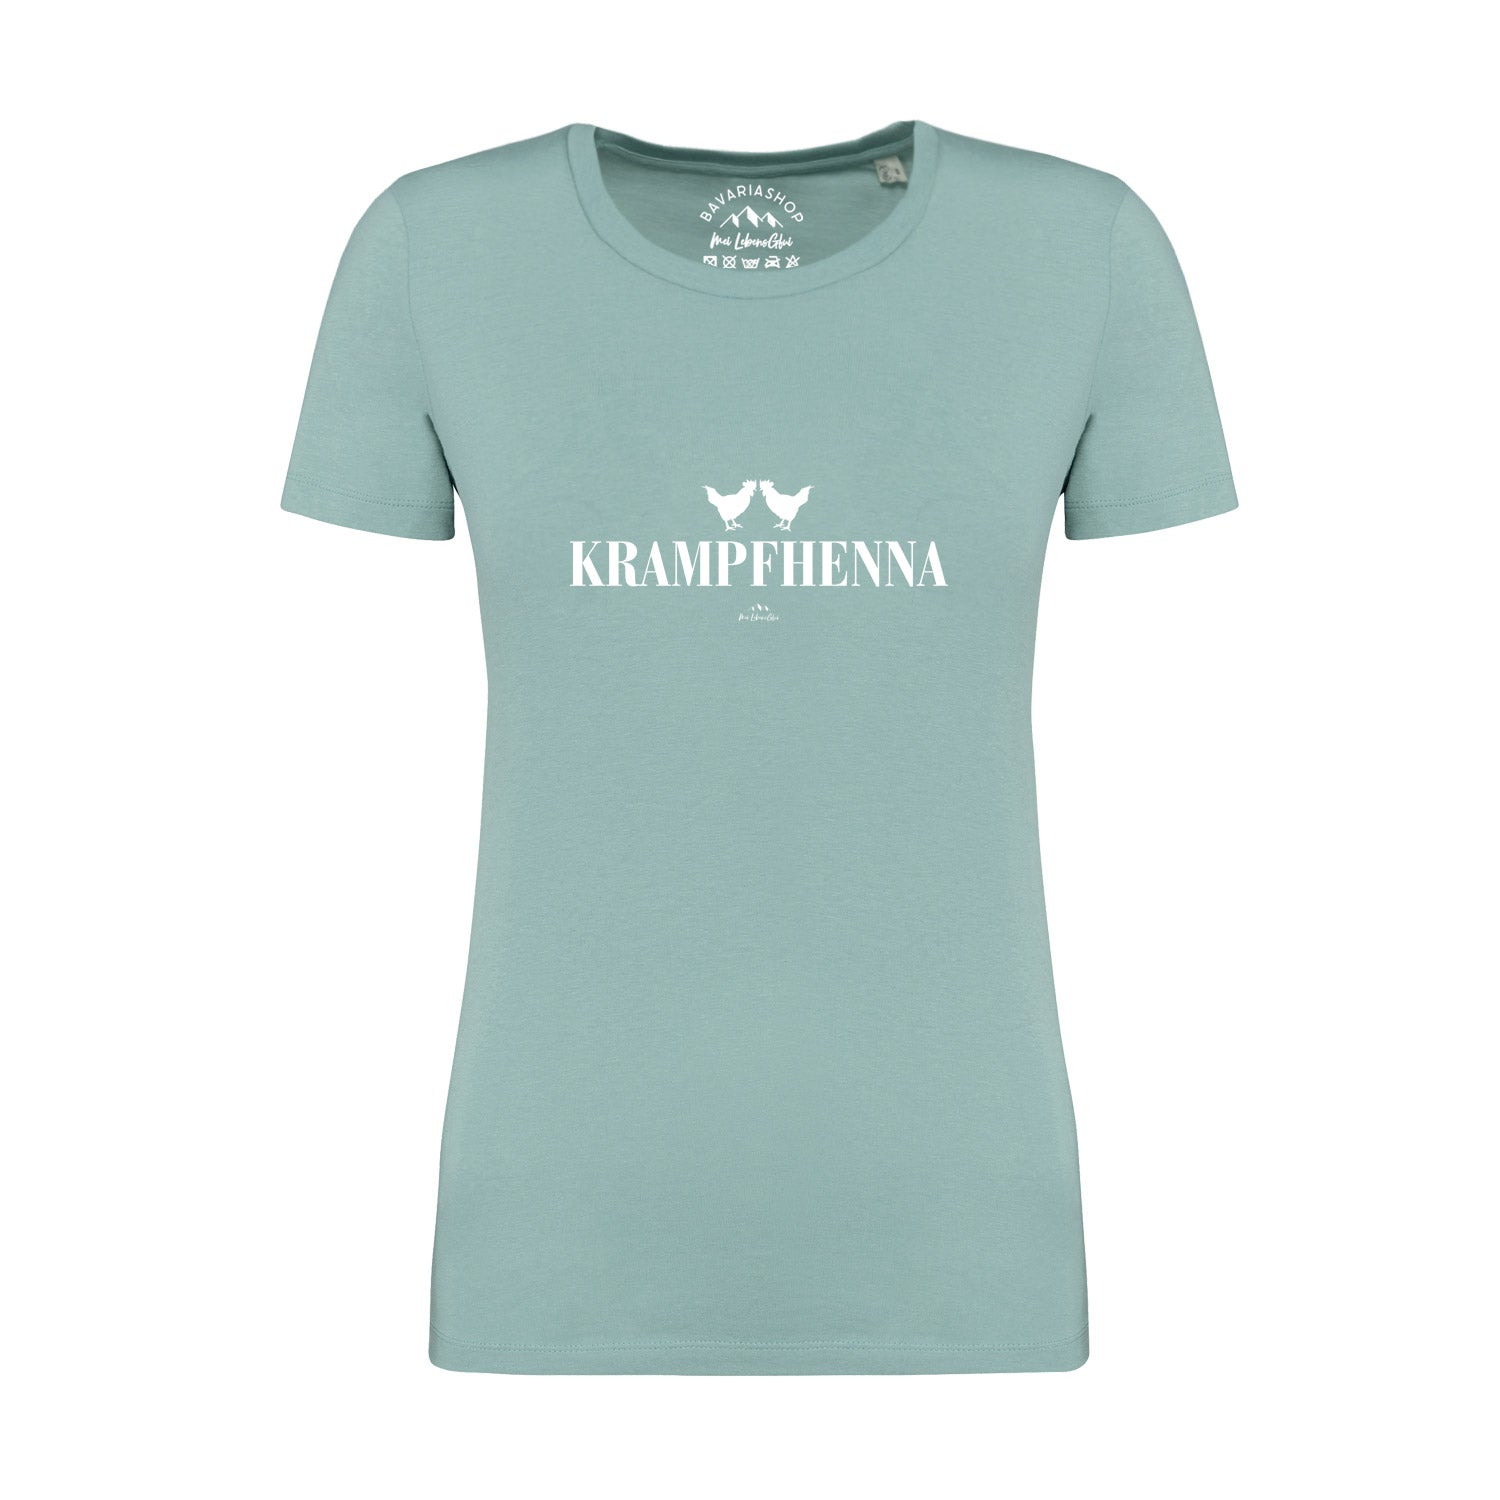 Damen T-Shirt "Krampfhenna"